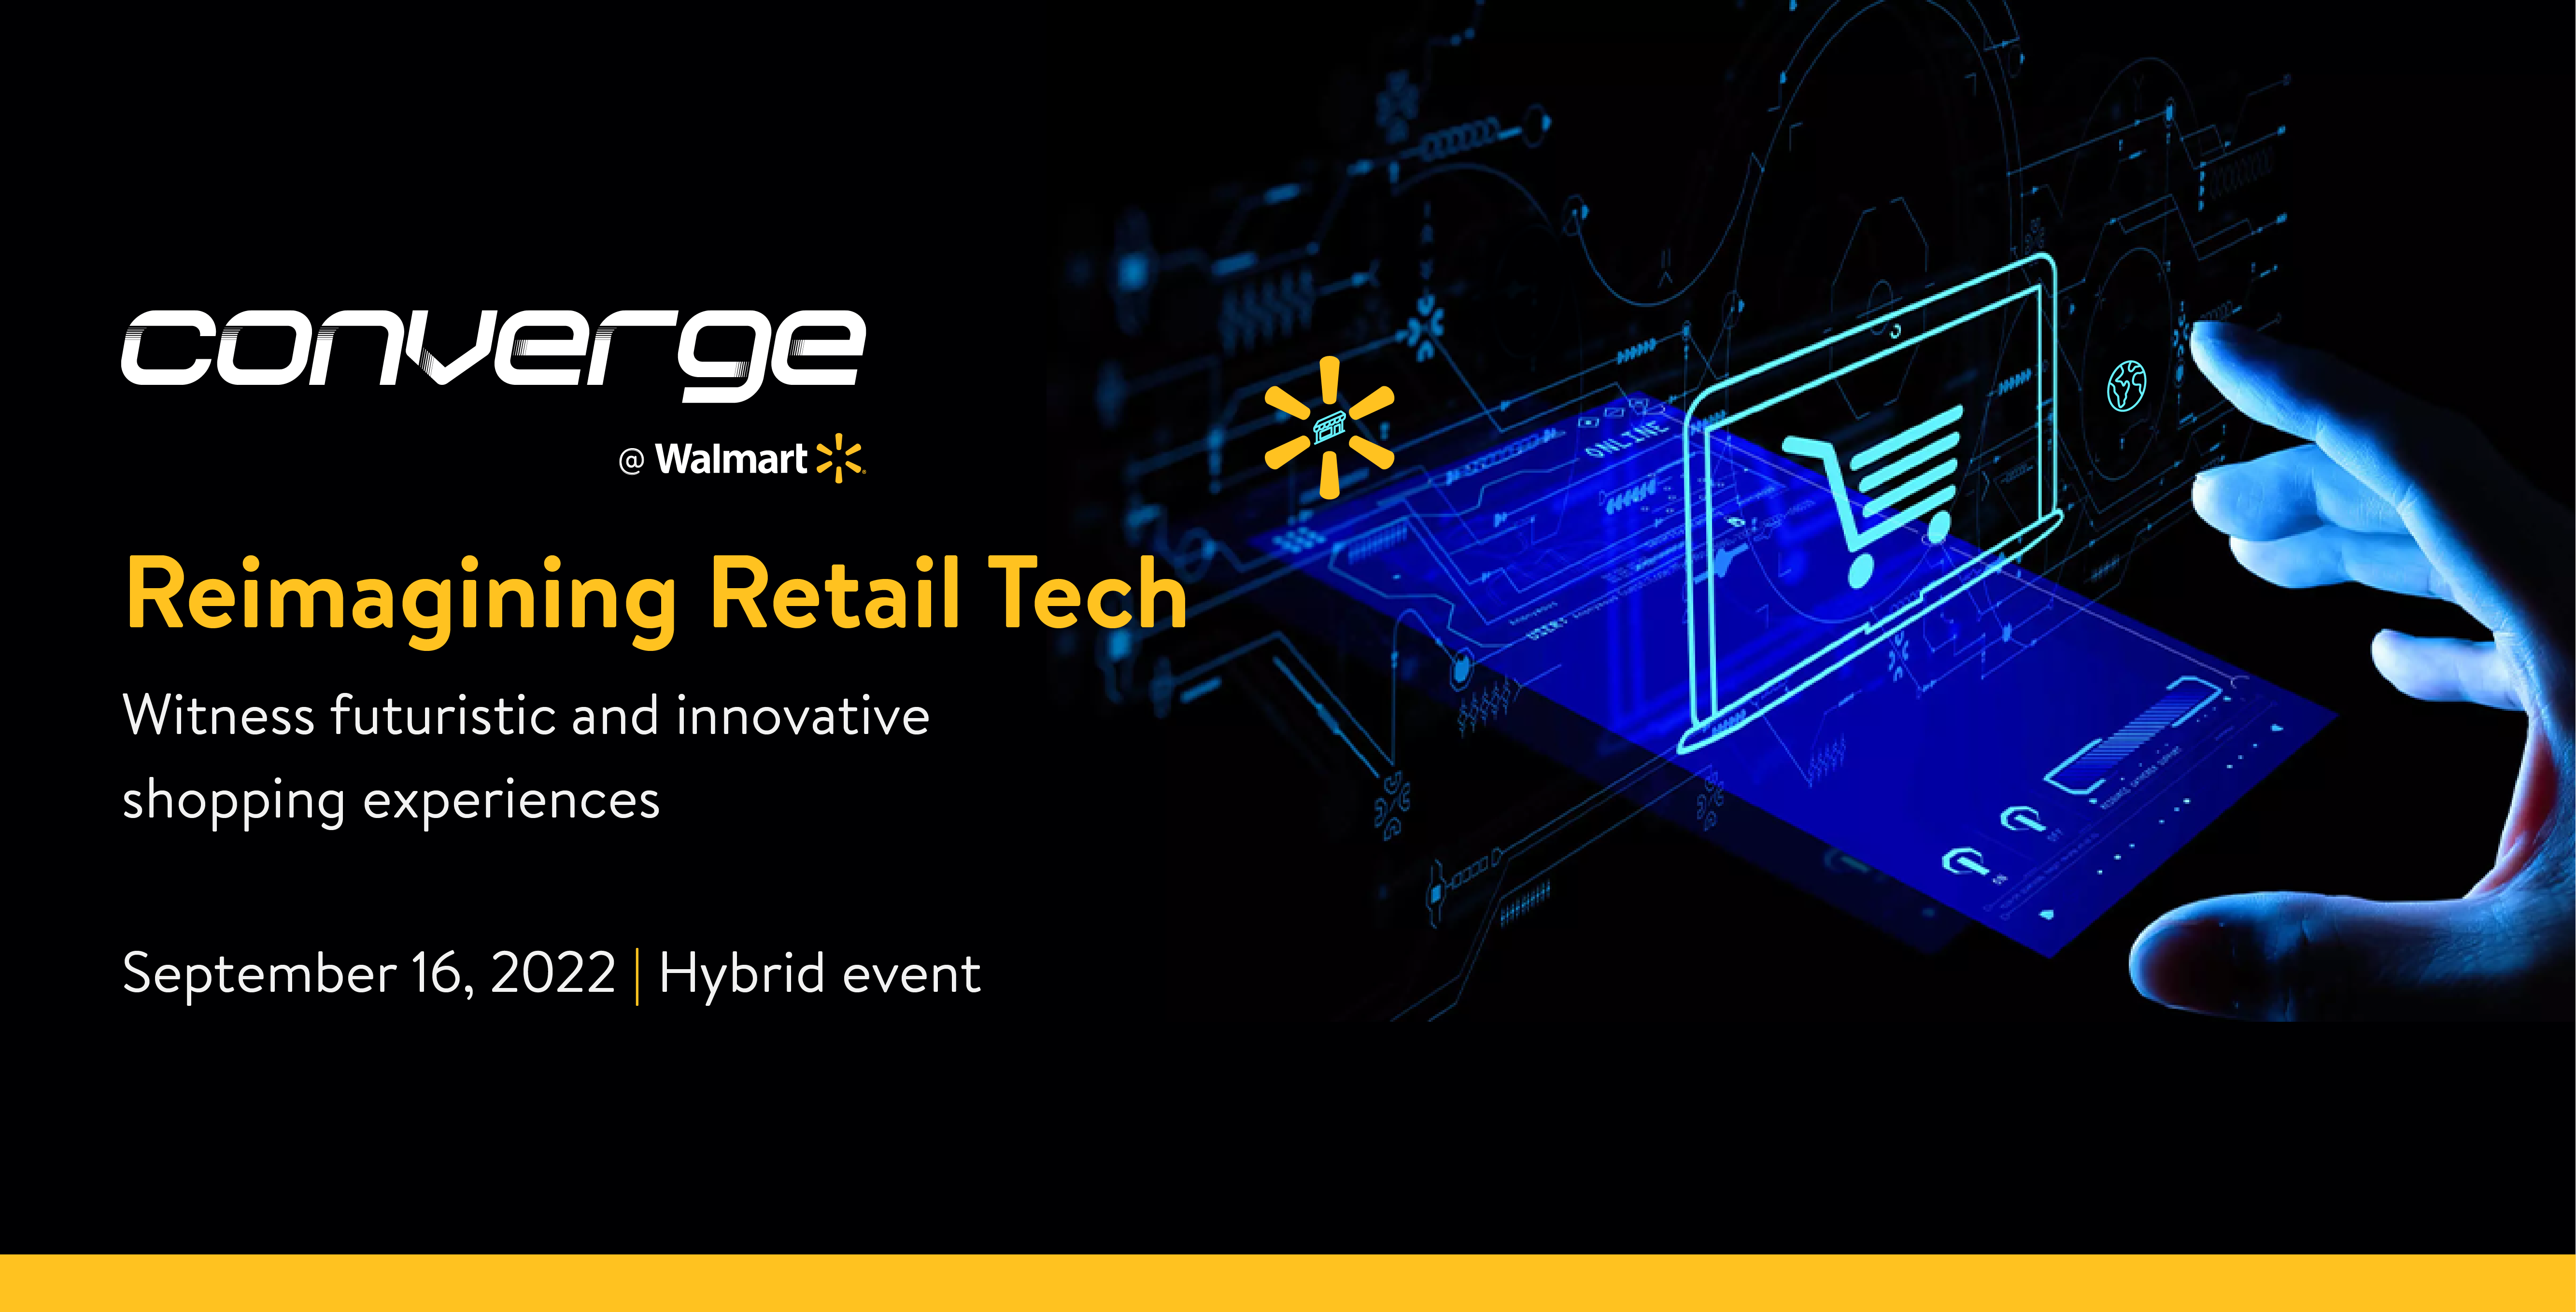 Converge @ Walmart is back to reimagine retail tech!